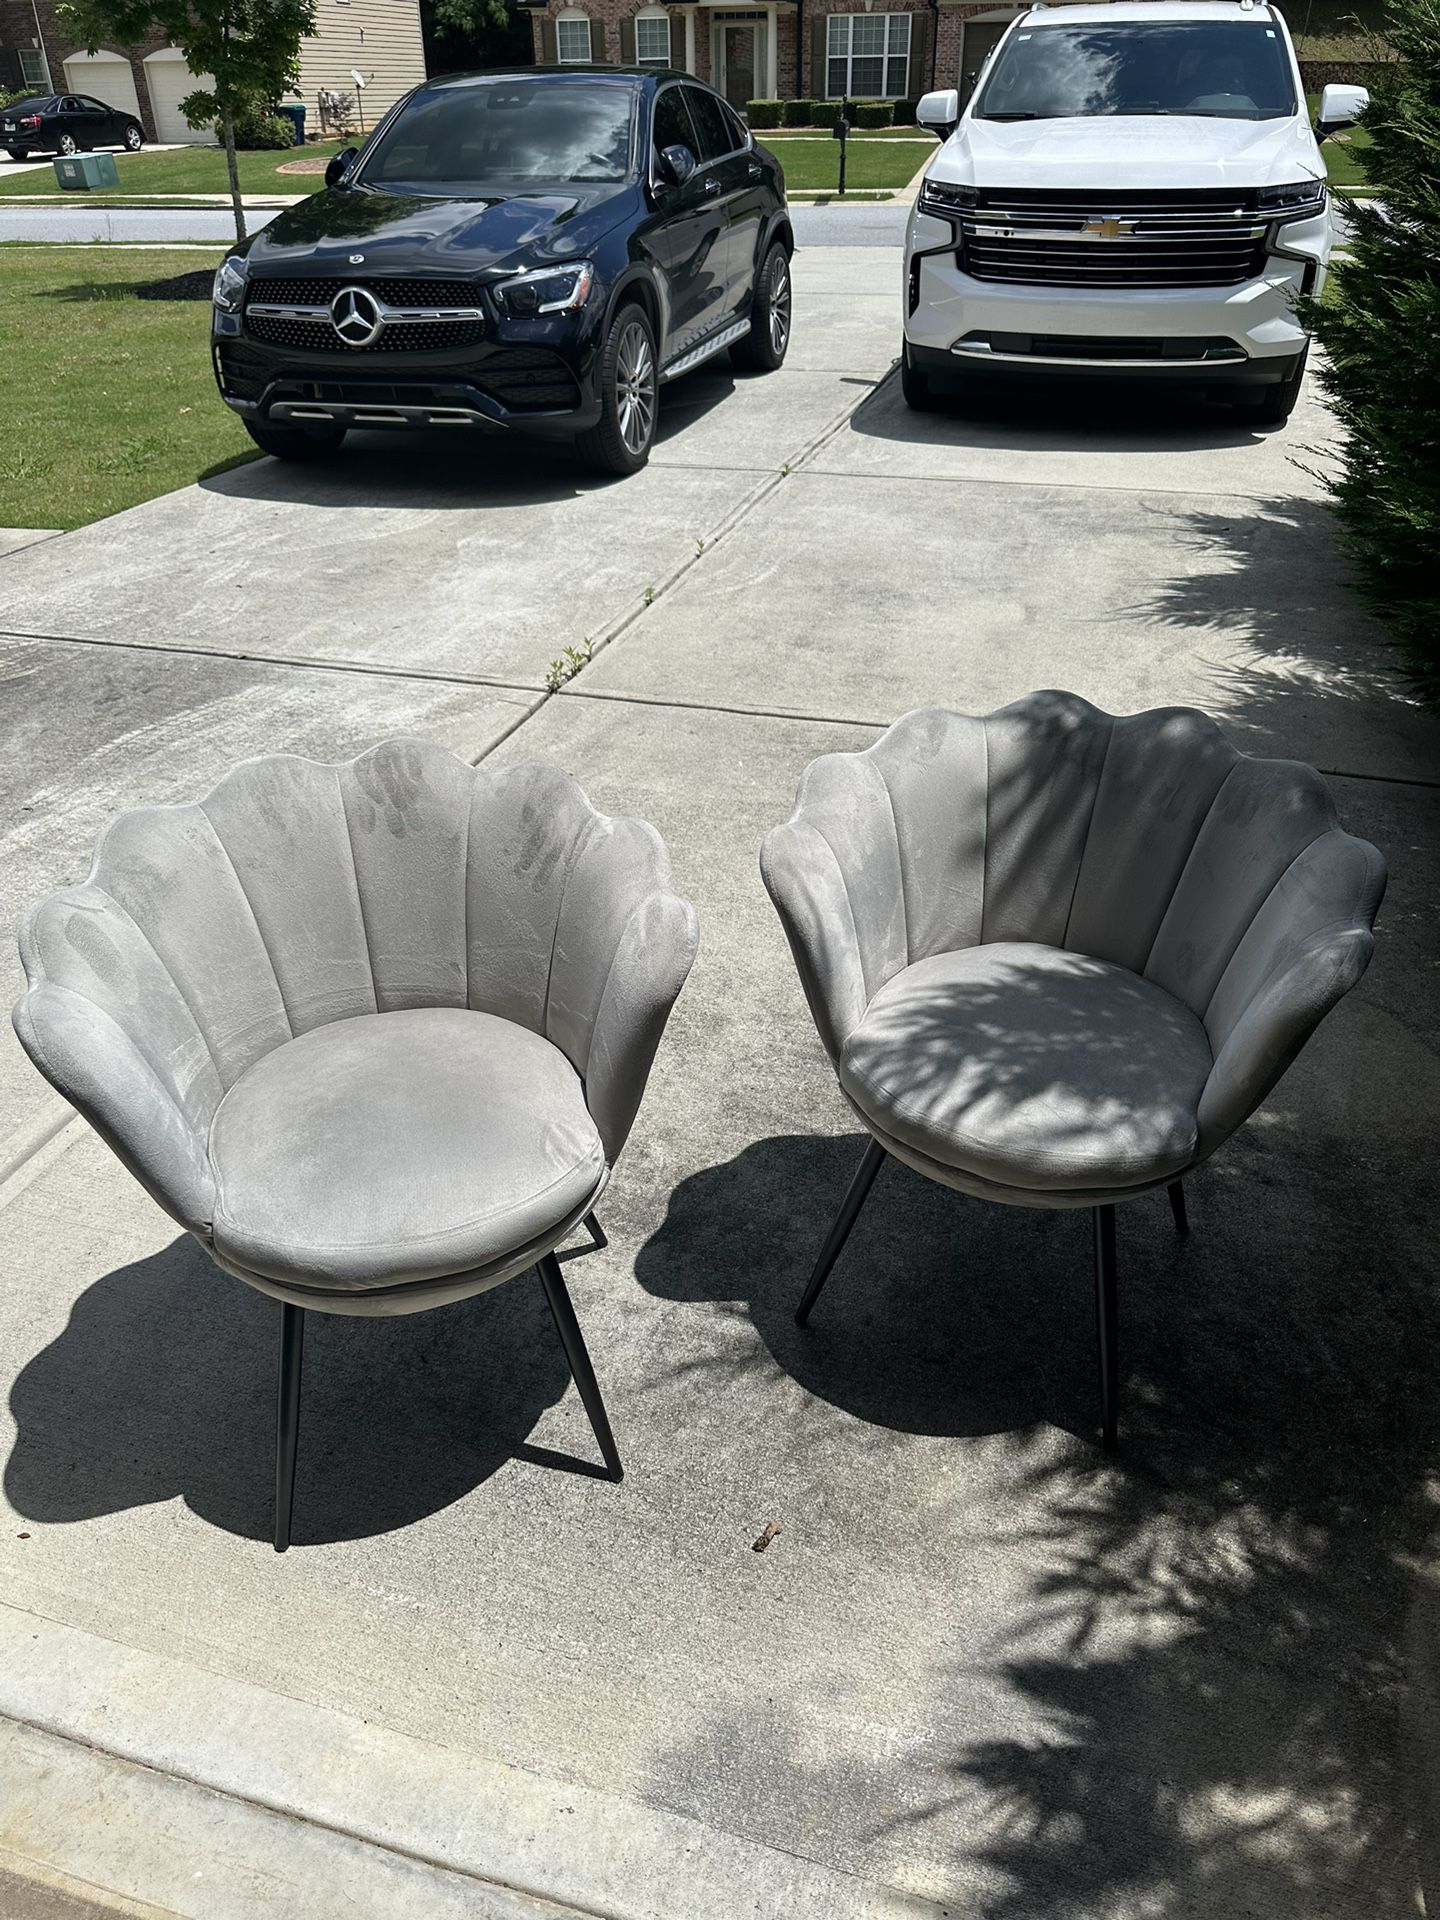 Matching Petal Chairs Set